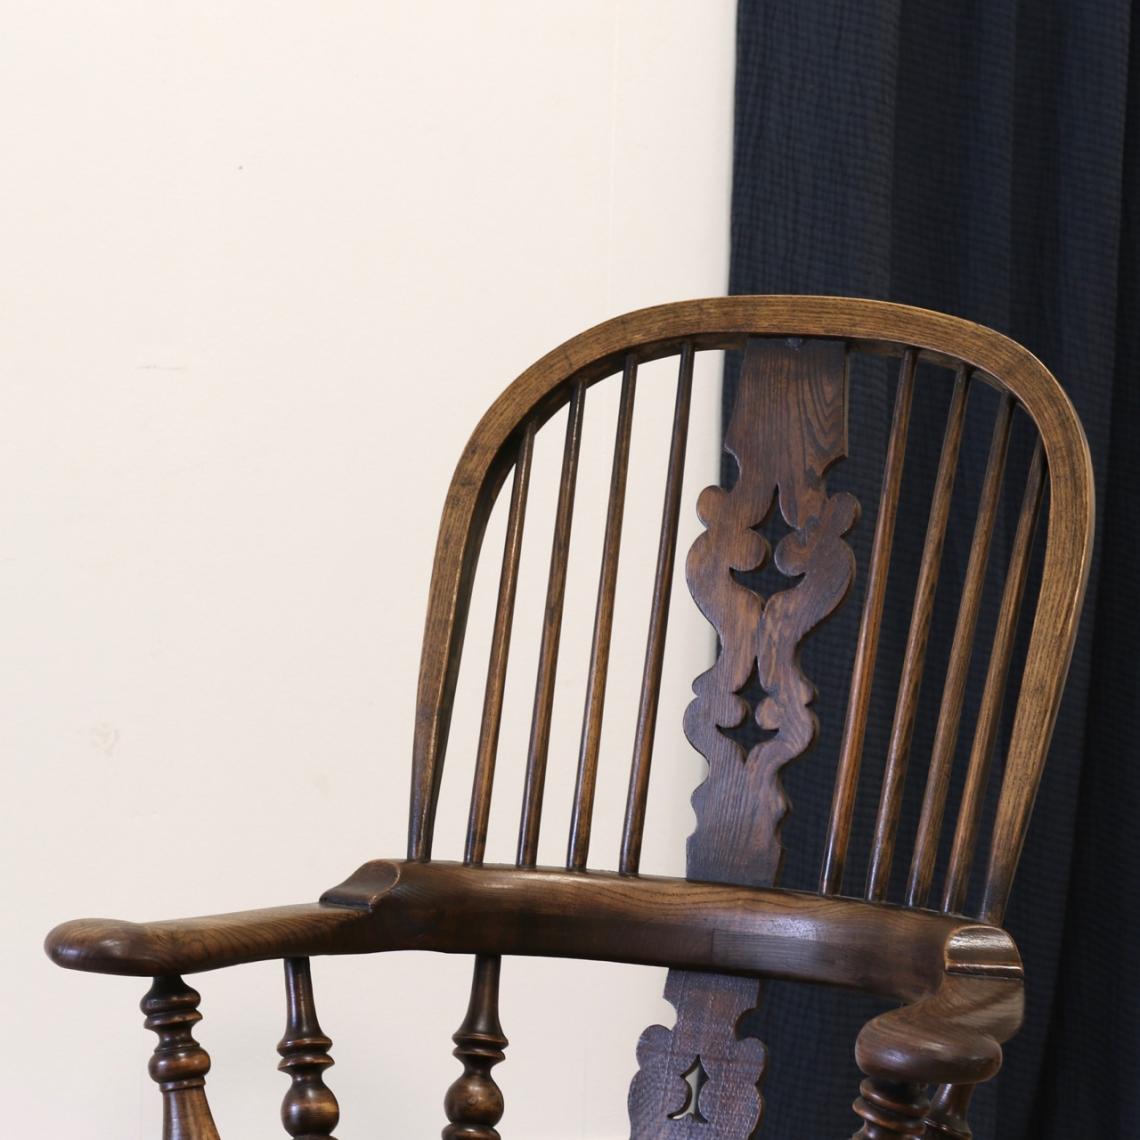 Windsor Carver Chair